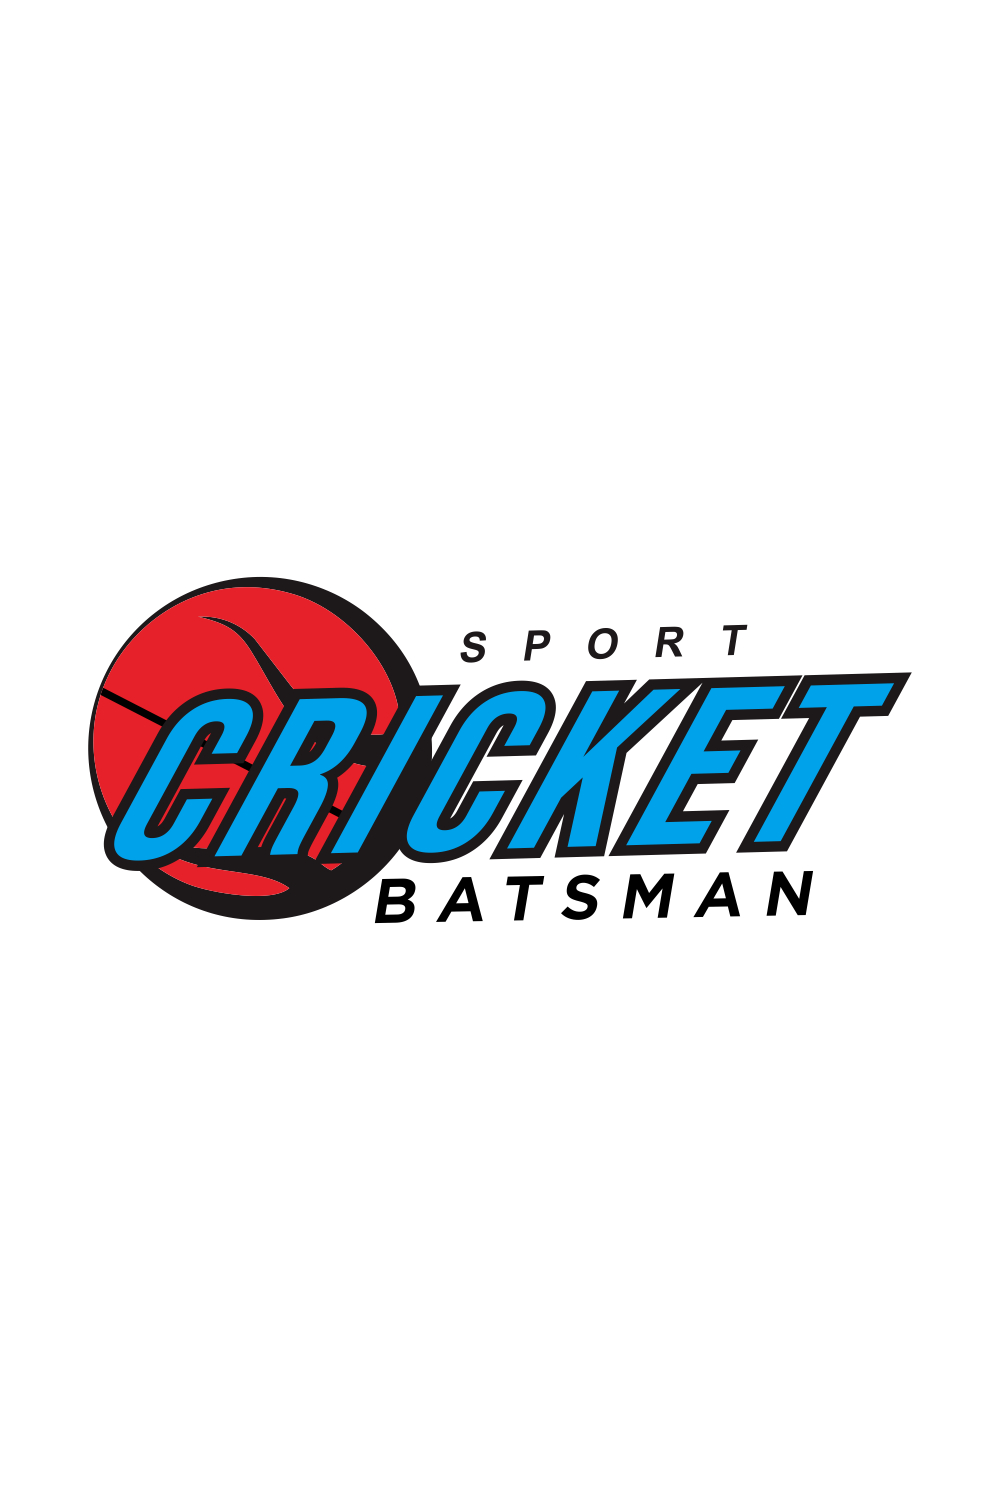 Cricket sport logo design vector illustration pinterest preview image.